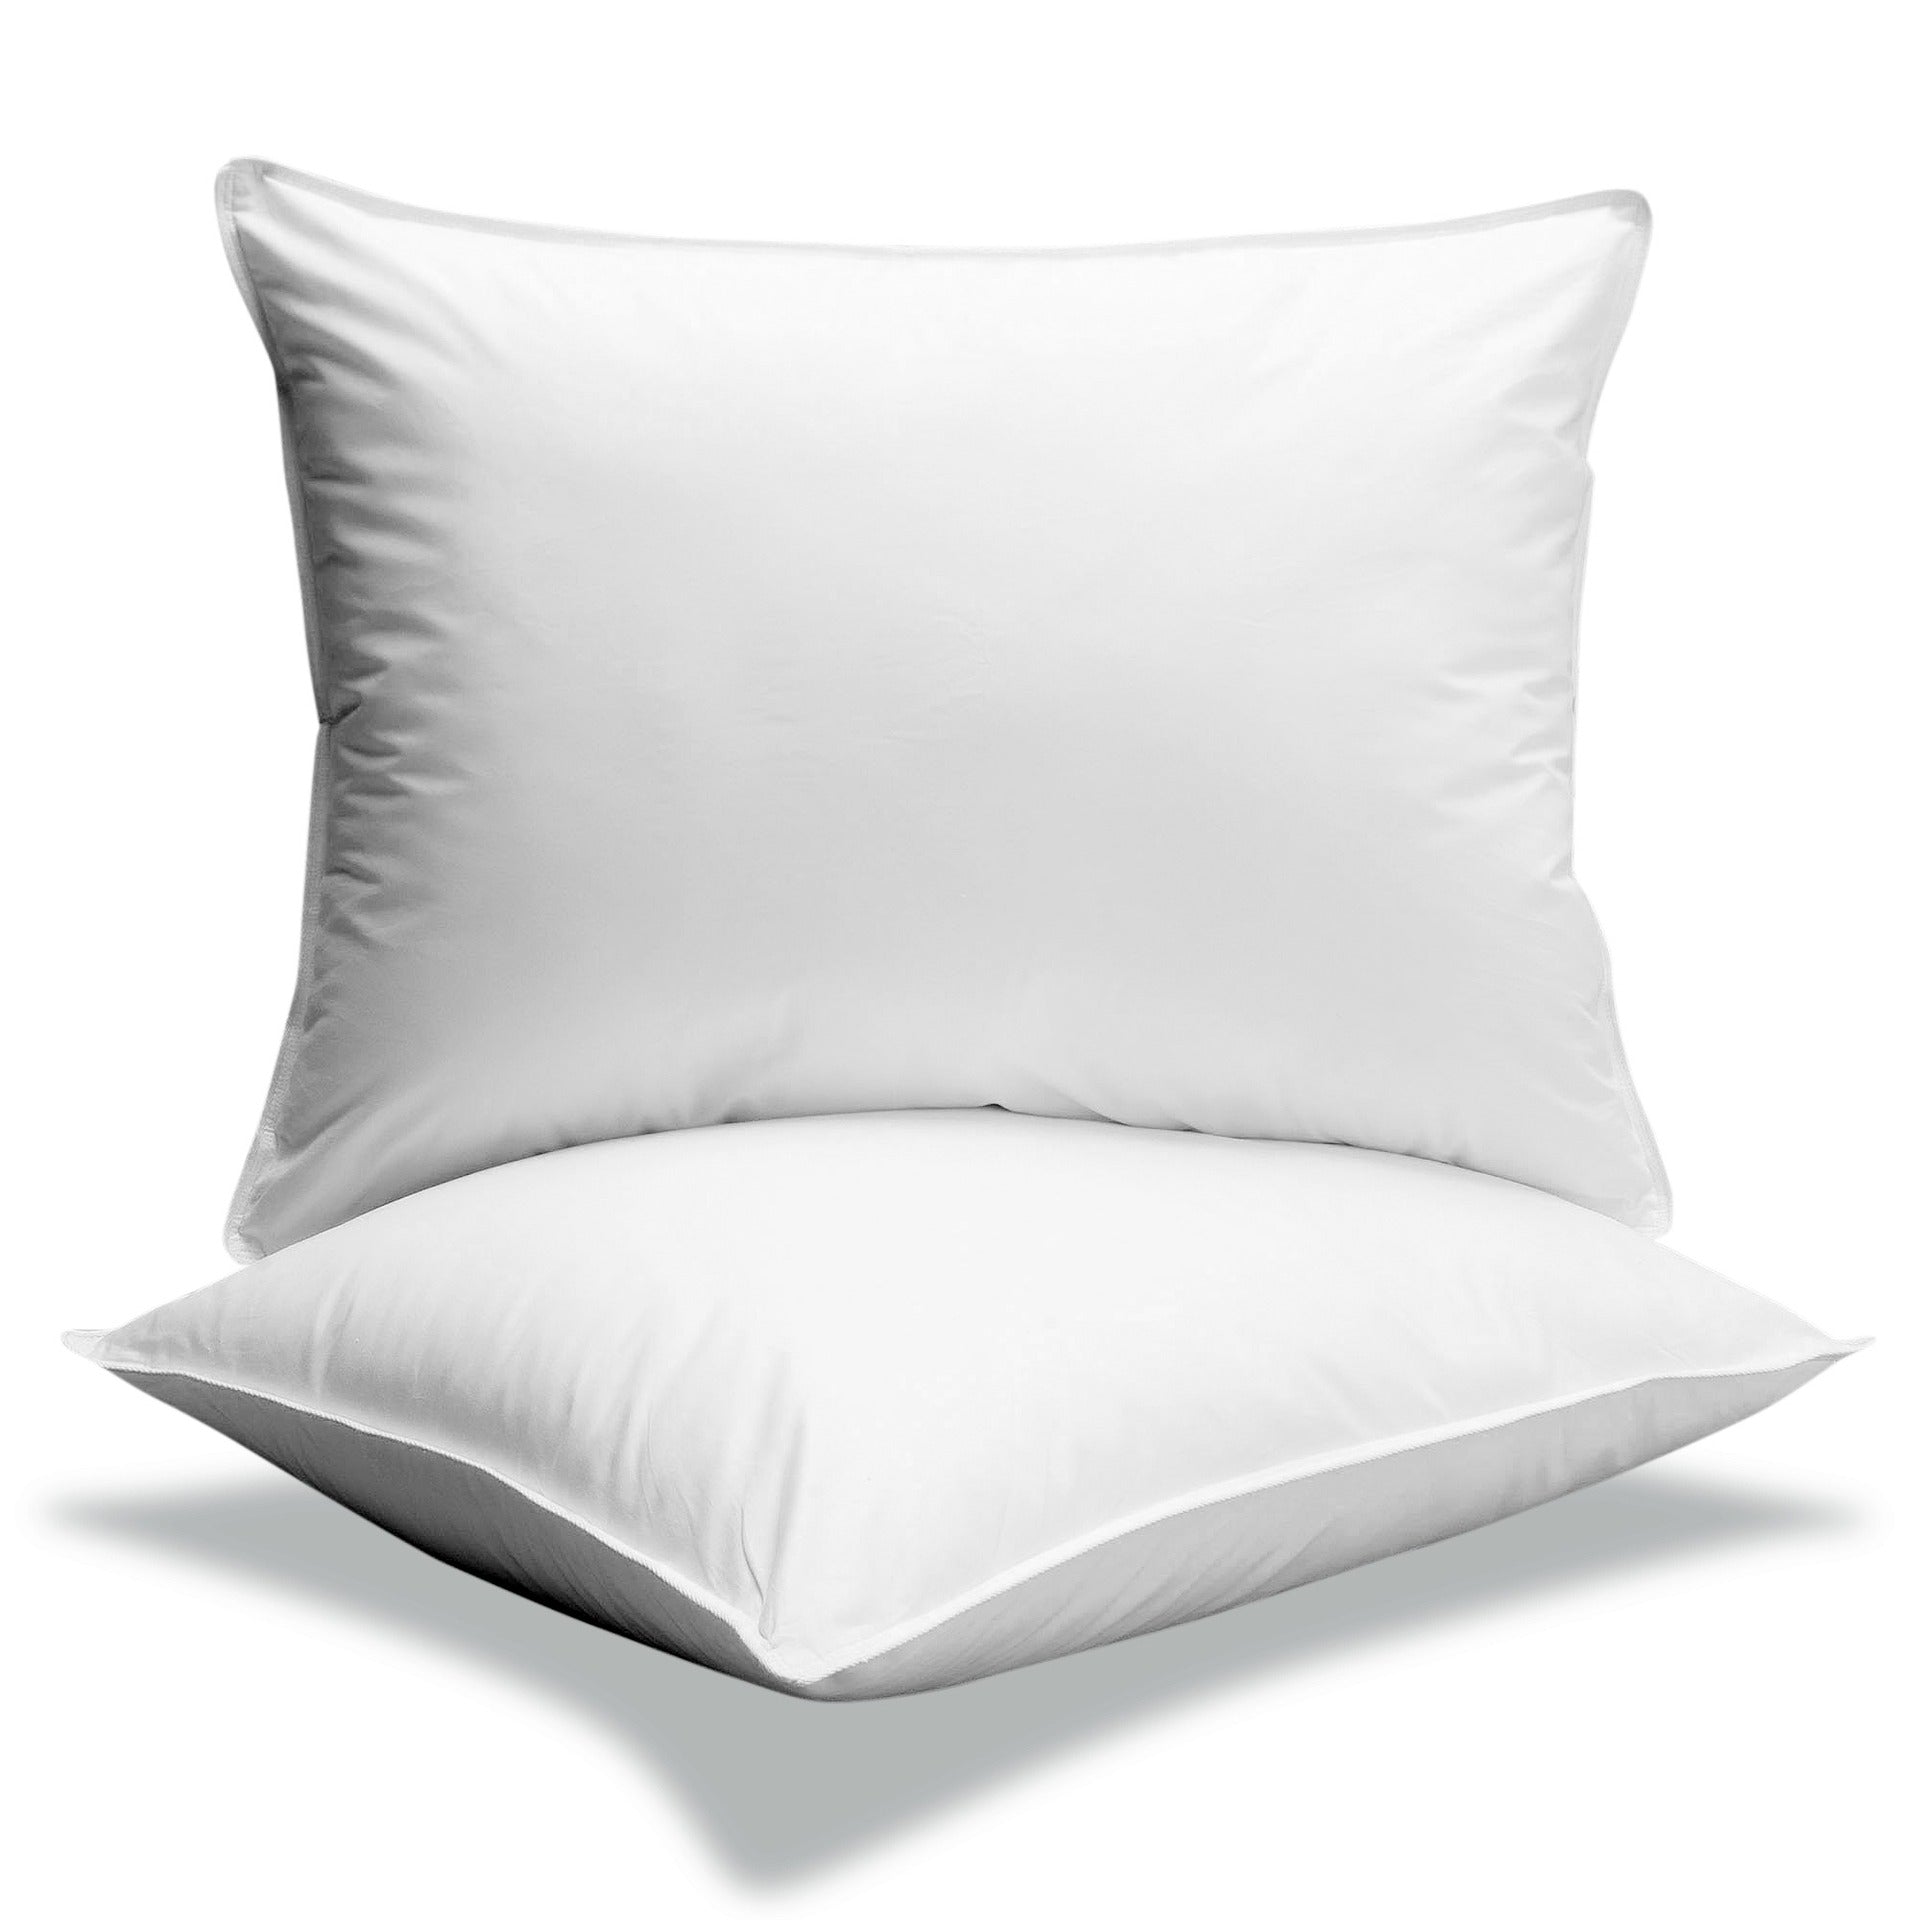 Hosptial Pillows Do's And Don'ts